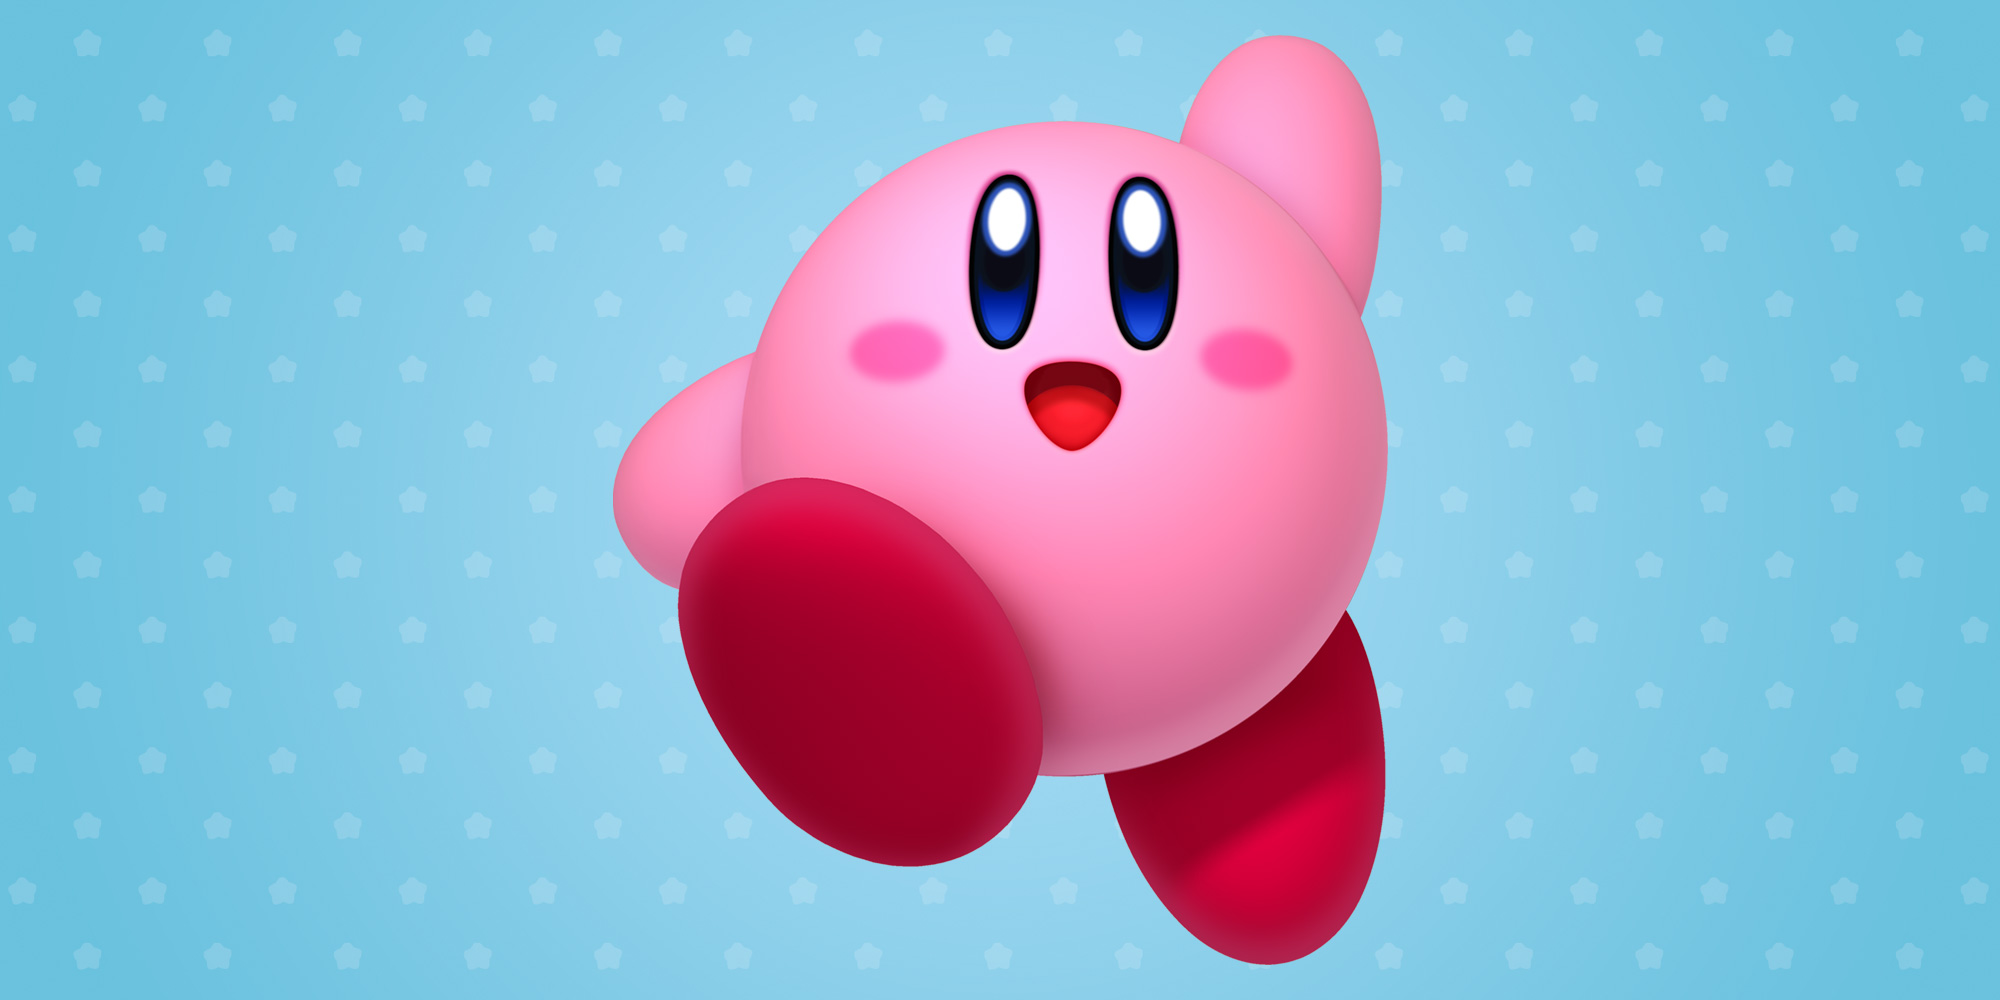 Kirby's namesake, Nintendo lawyer John Kirby, has died - MCV/DEVELOP